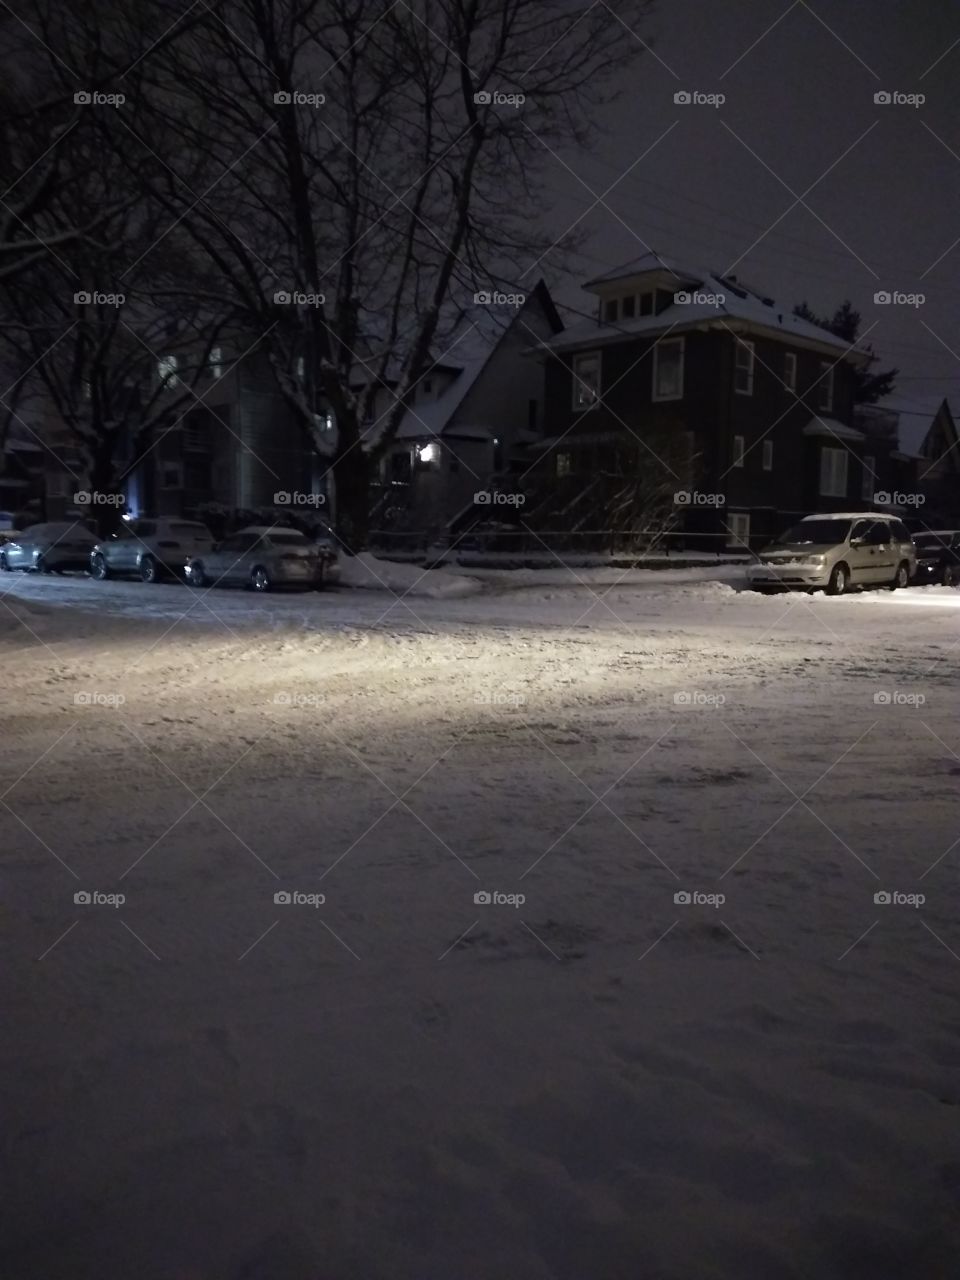 Midnight walk in the snow